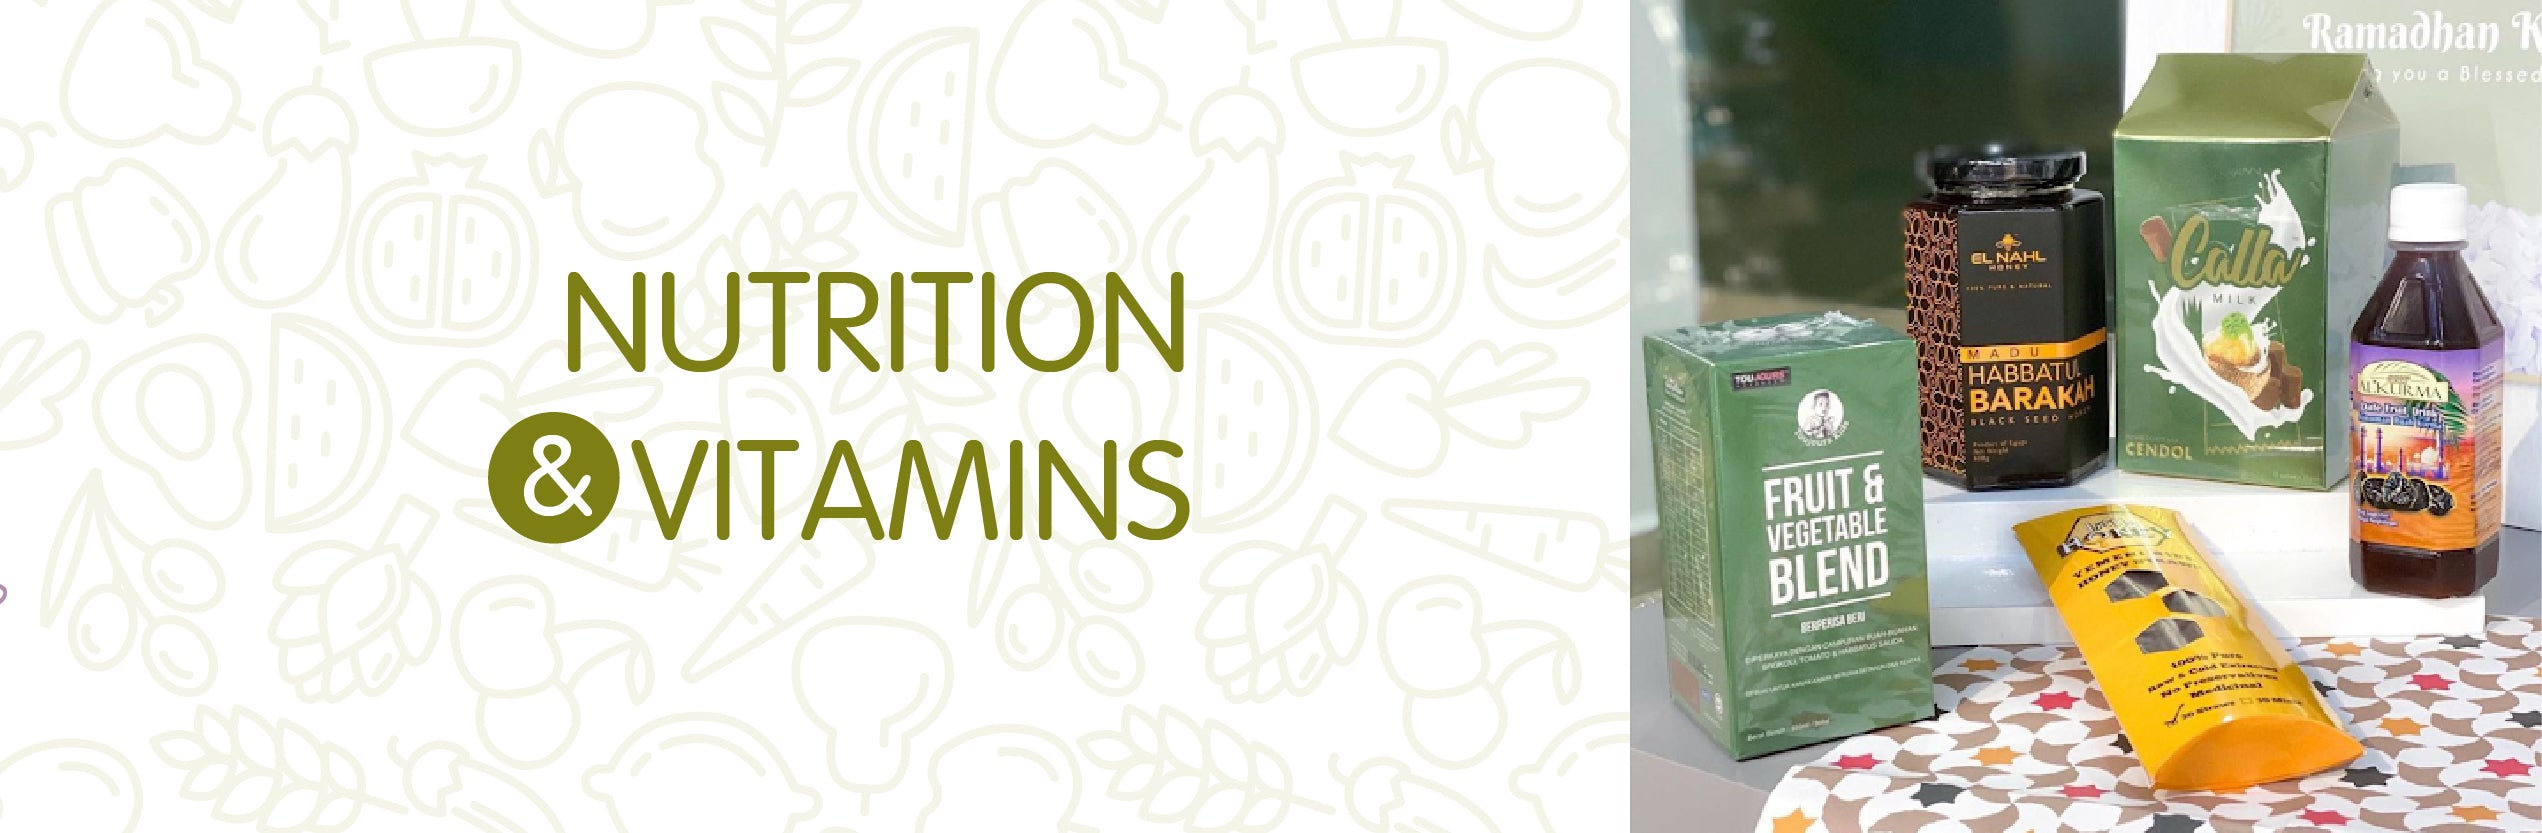 Nutrition & Vitamins